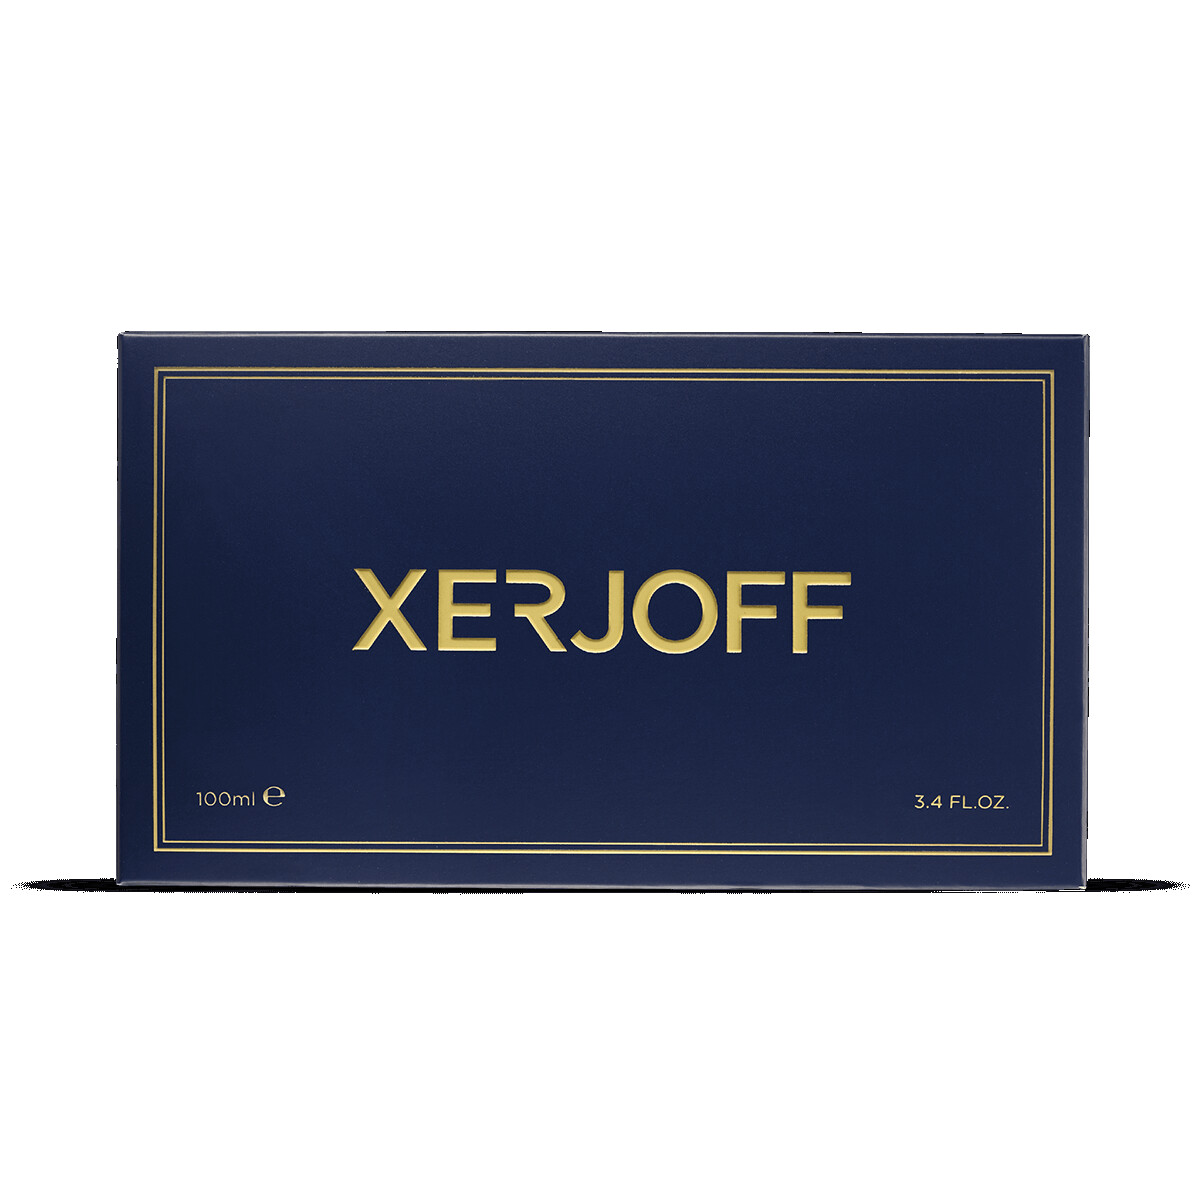 Xerjoff JOIN THE CLUB More than Words Eau de Parfum 100ml